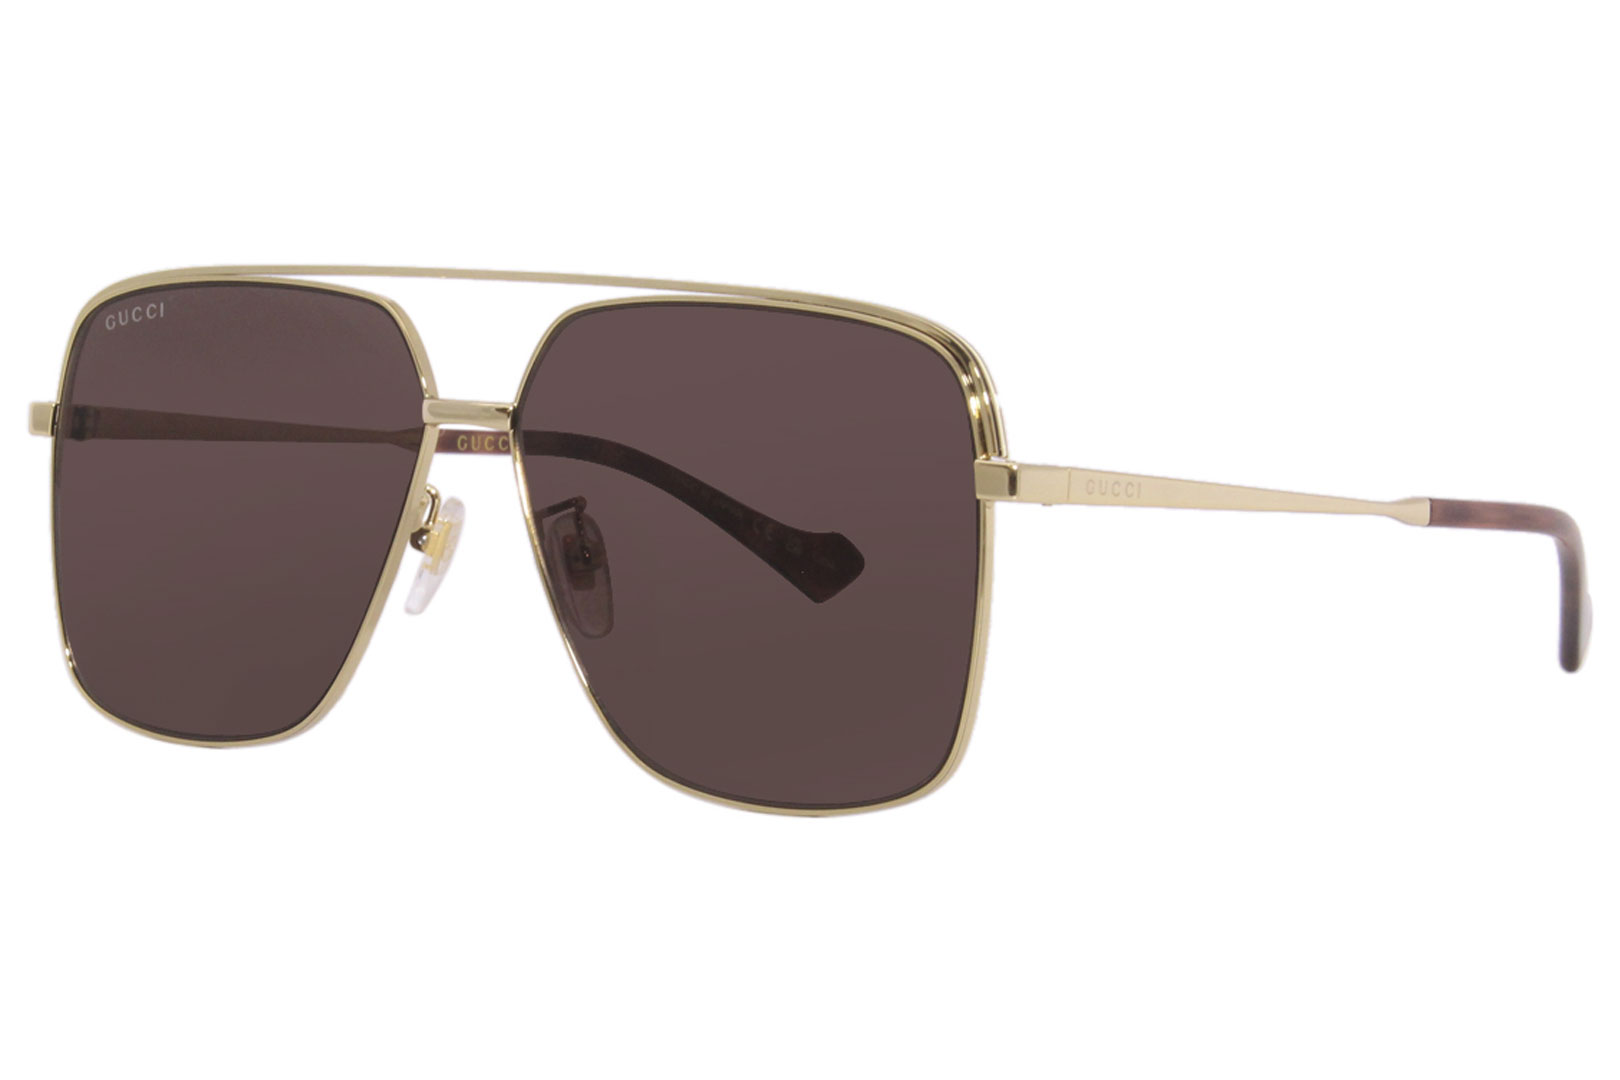 Gucci GG1099SA Sunglasses Men's Pilot | EyeSpecs.com